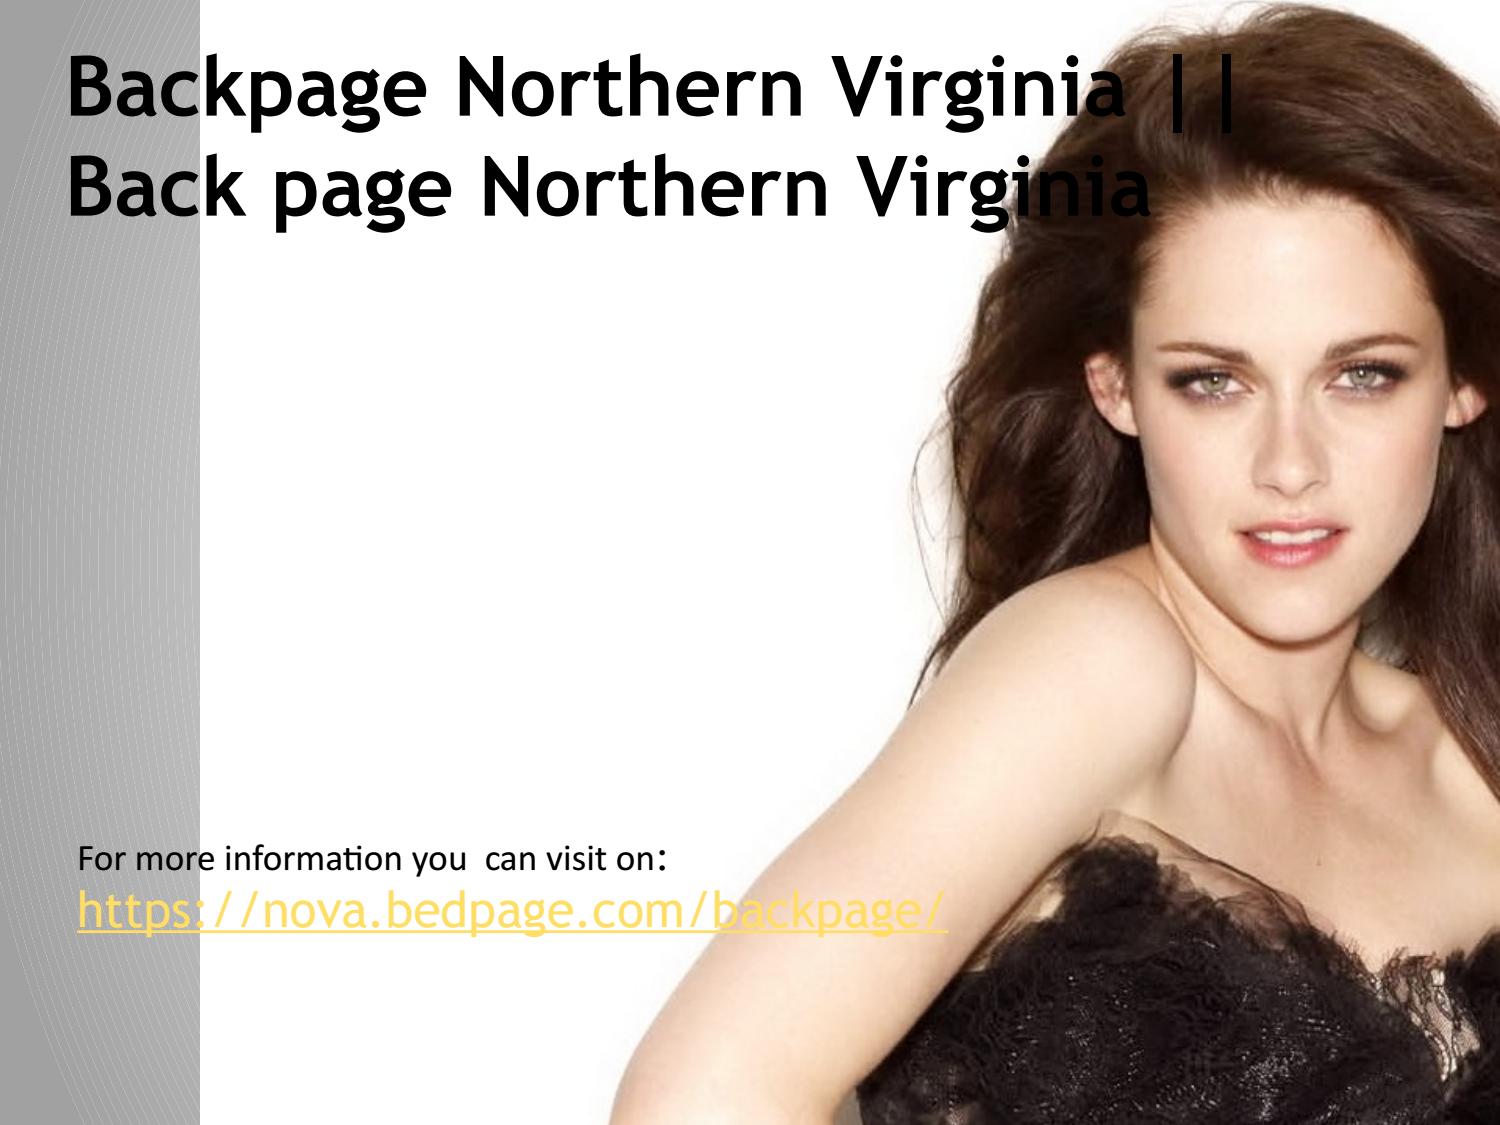 deborah hickey recommends north virginia back page pic